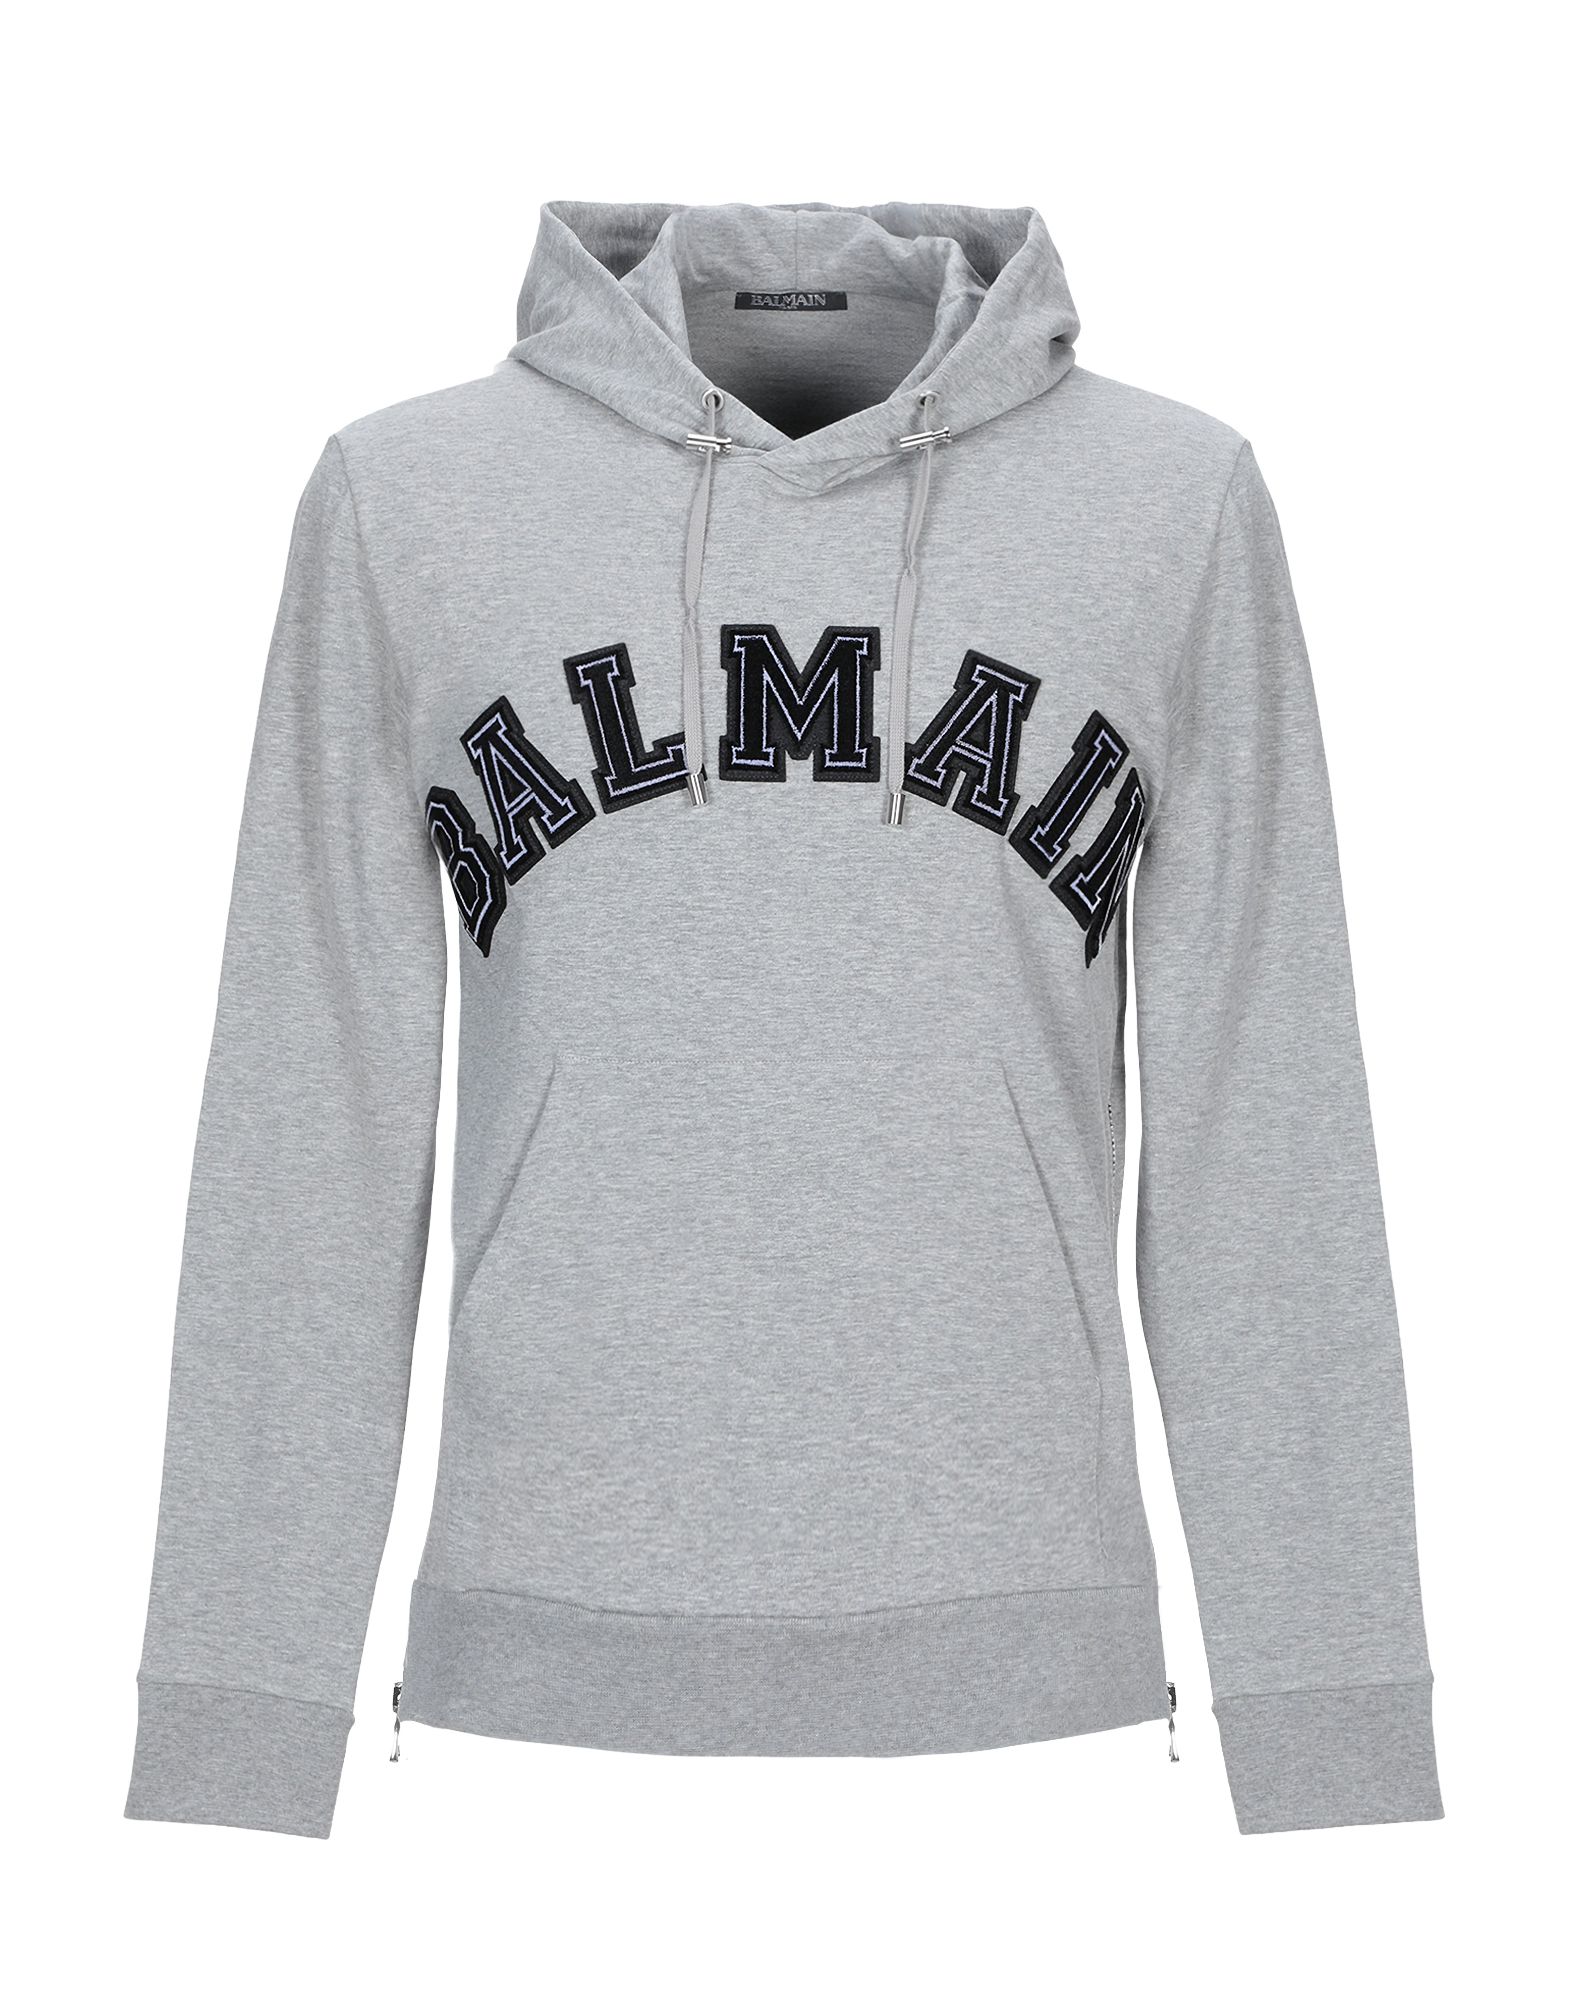 BALMAIN Hooded sweatshirt,12321570VH 4